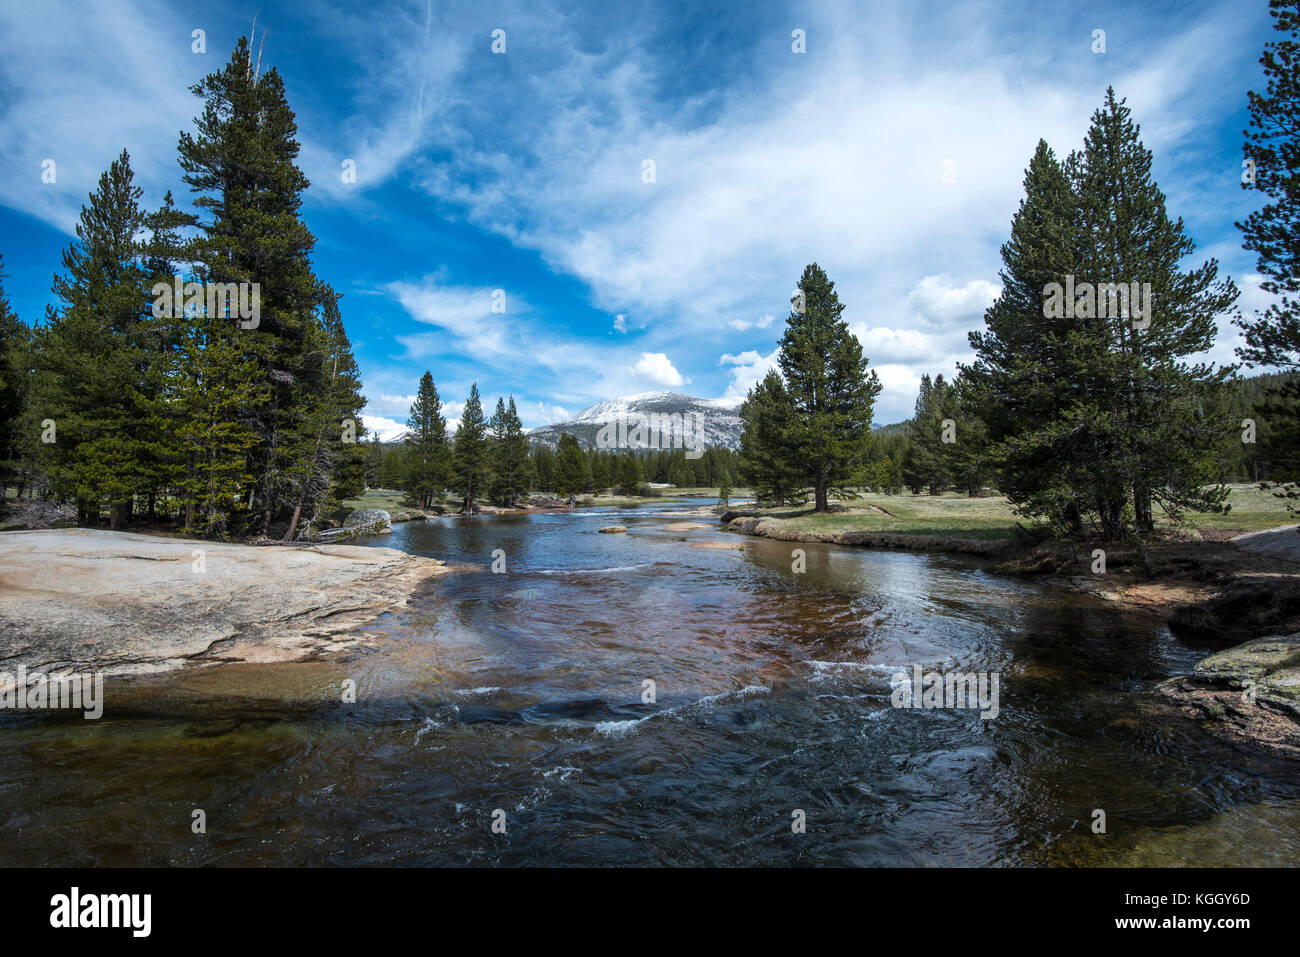 The Tuolumne River flows through the Tioga region of Yosemite National Park. Stock Photo